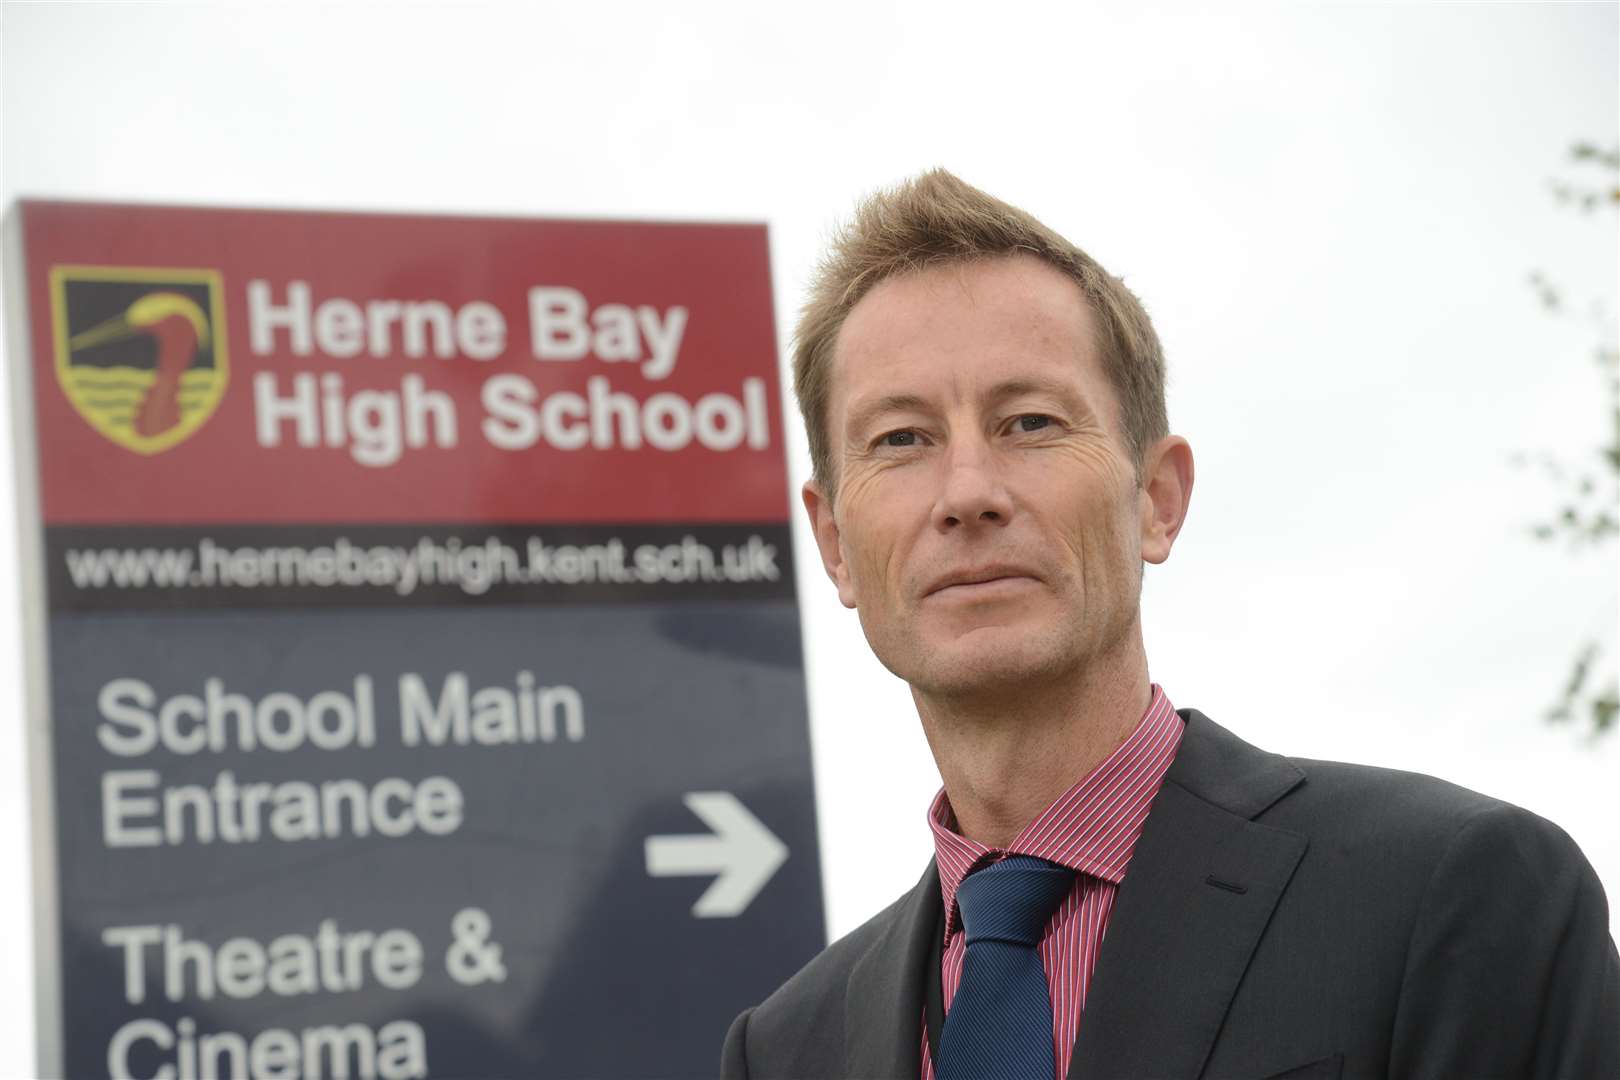 Herne Bay High School head teacher Jon Boyes